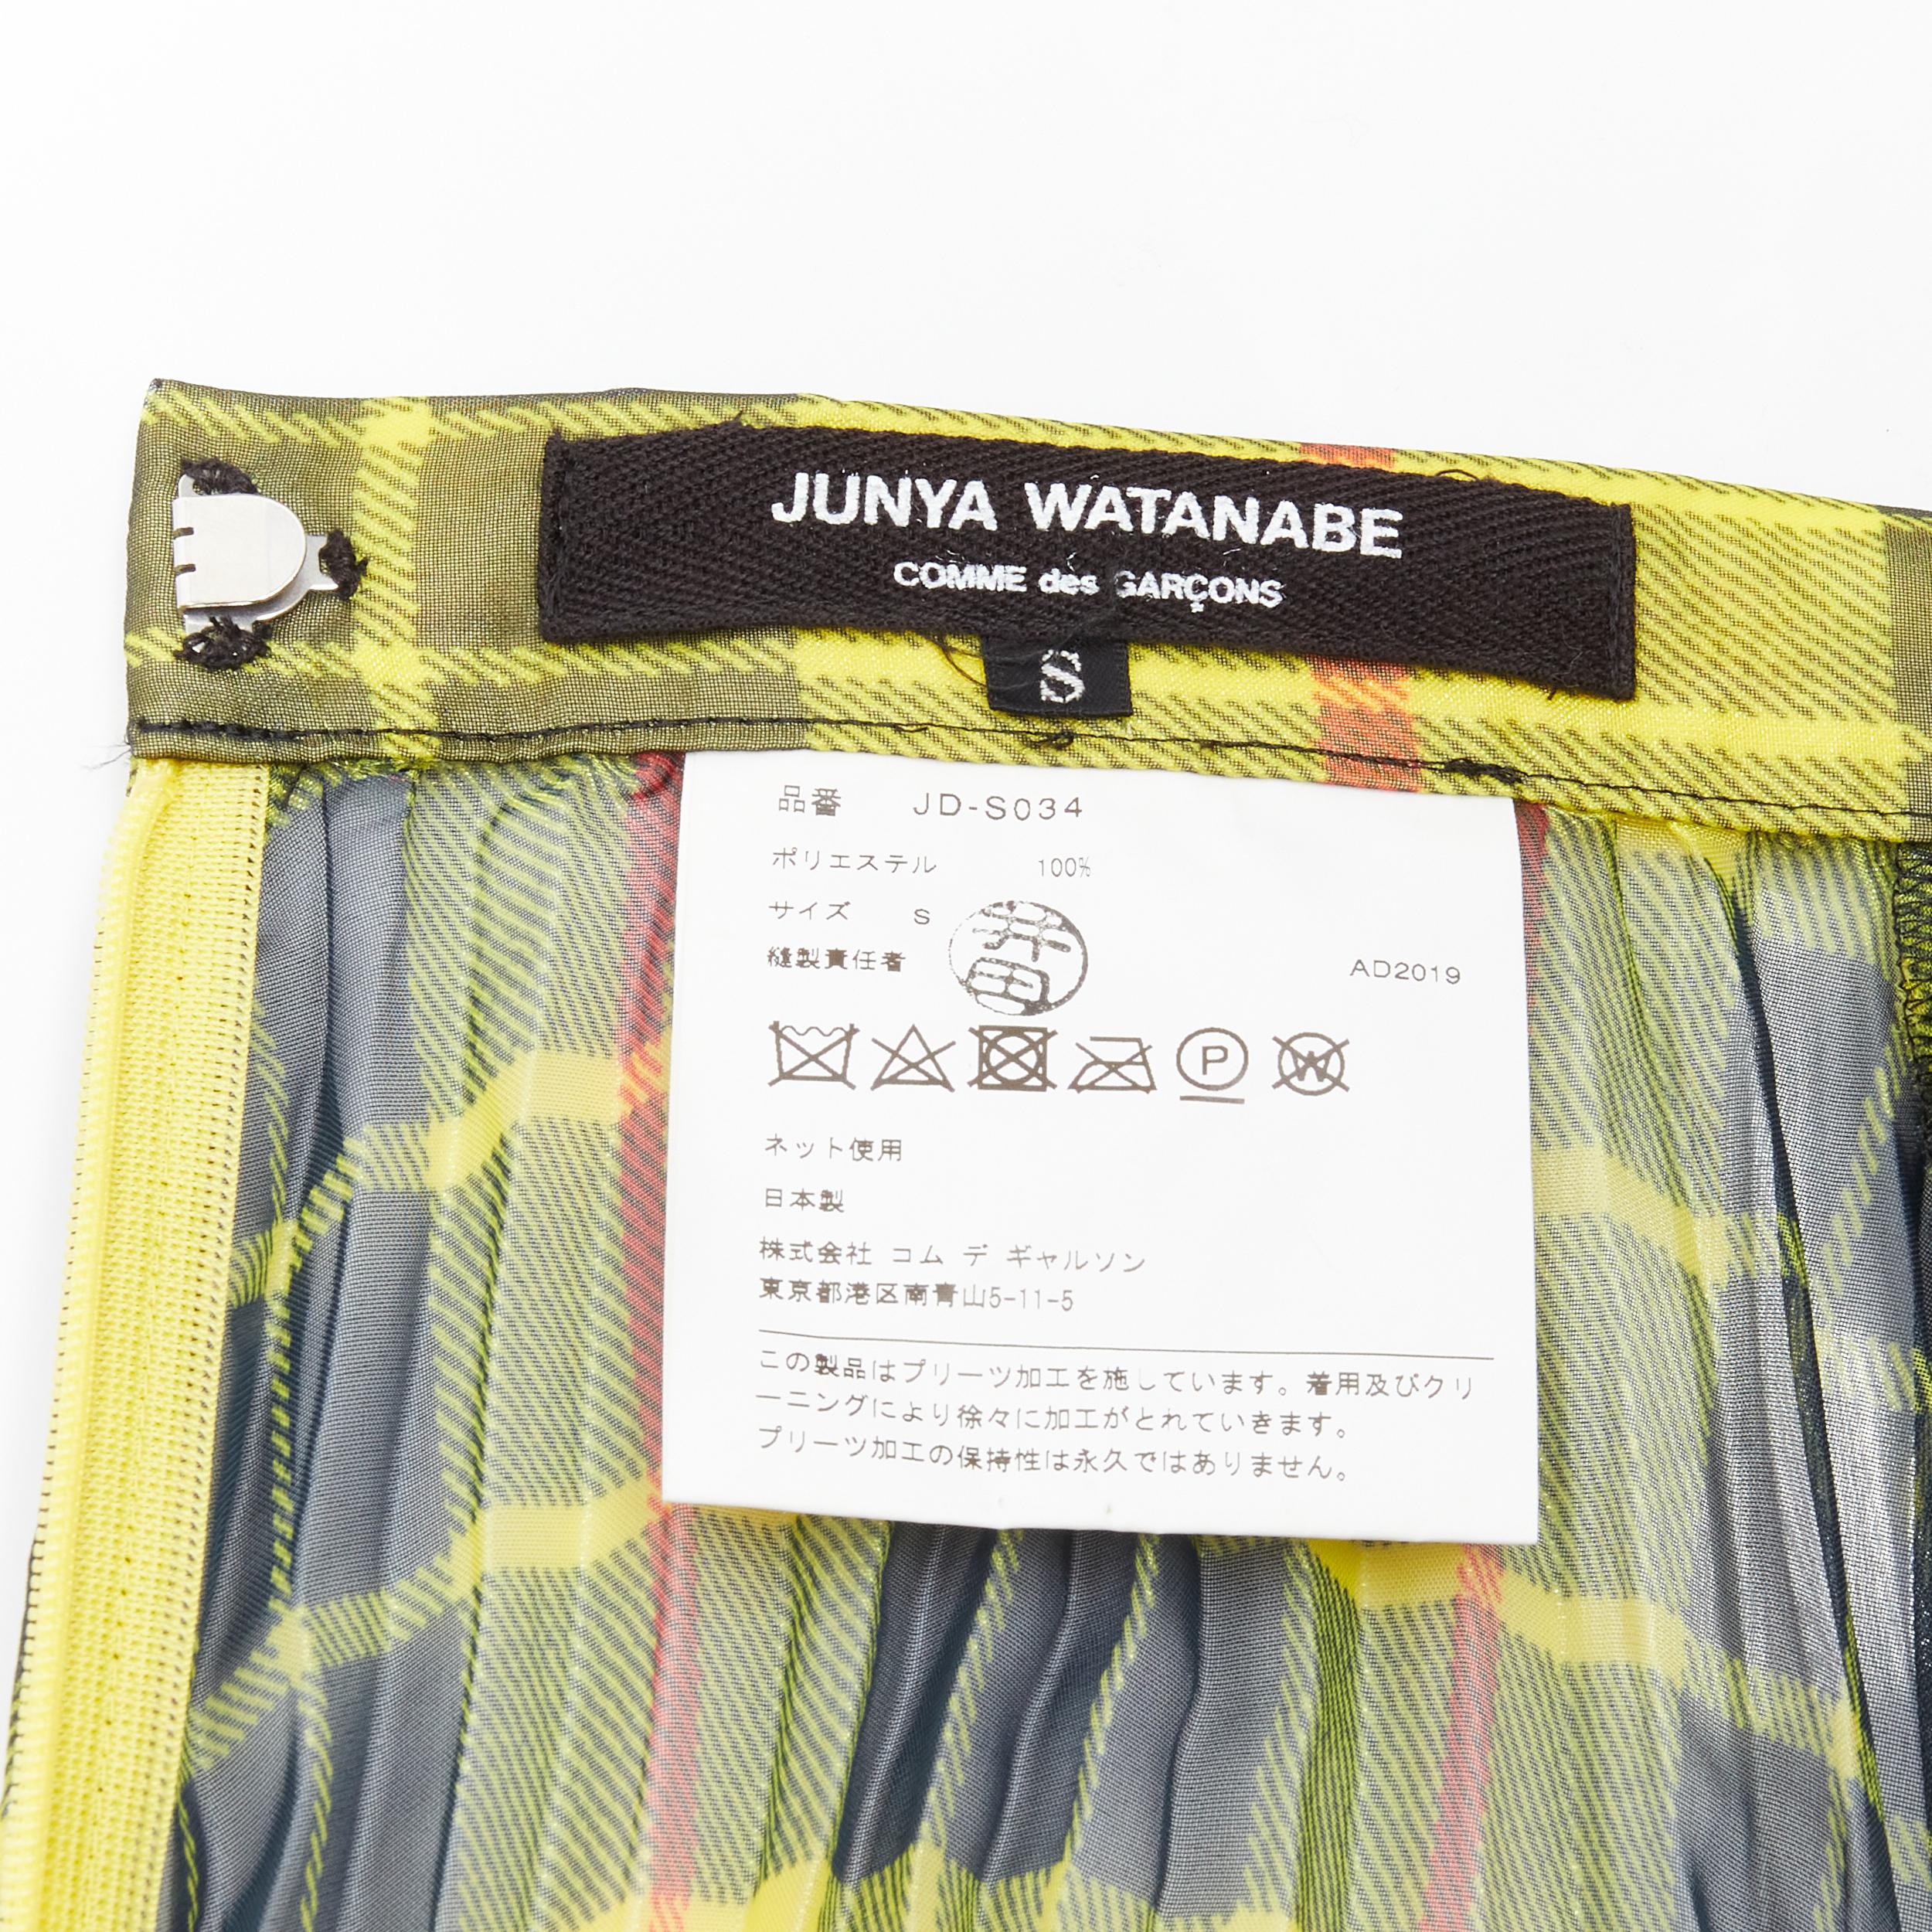 JUNYA WATANABE 2019 yellow sheer Punk plaid tartan pleated midi skirt S For Sale 5